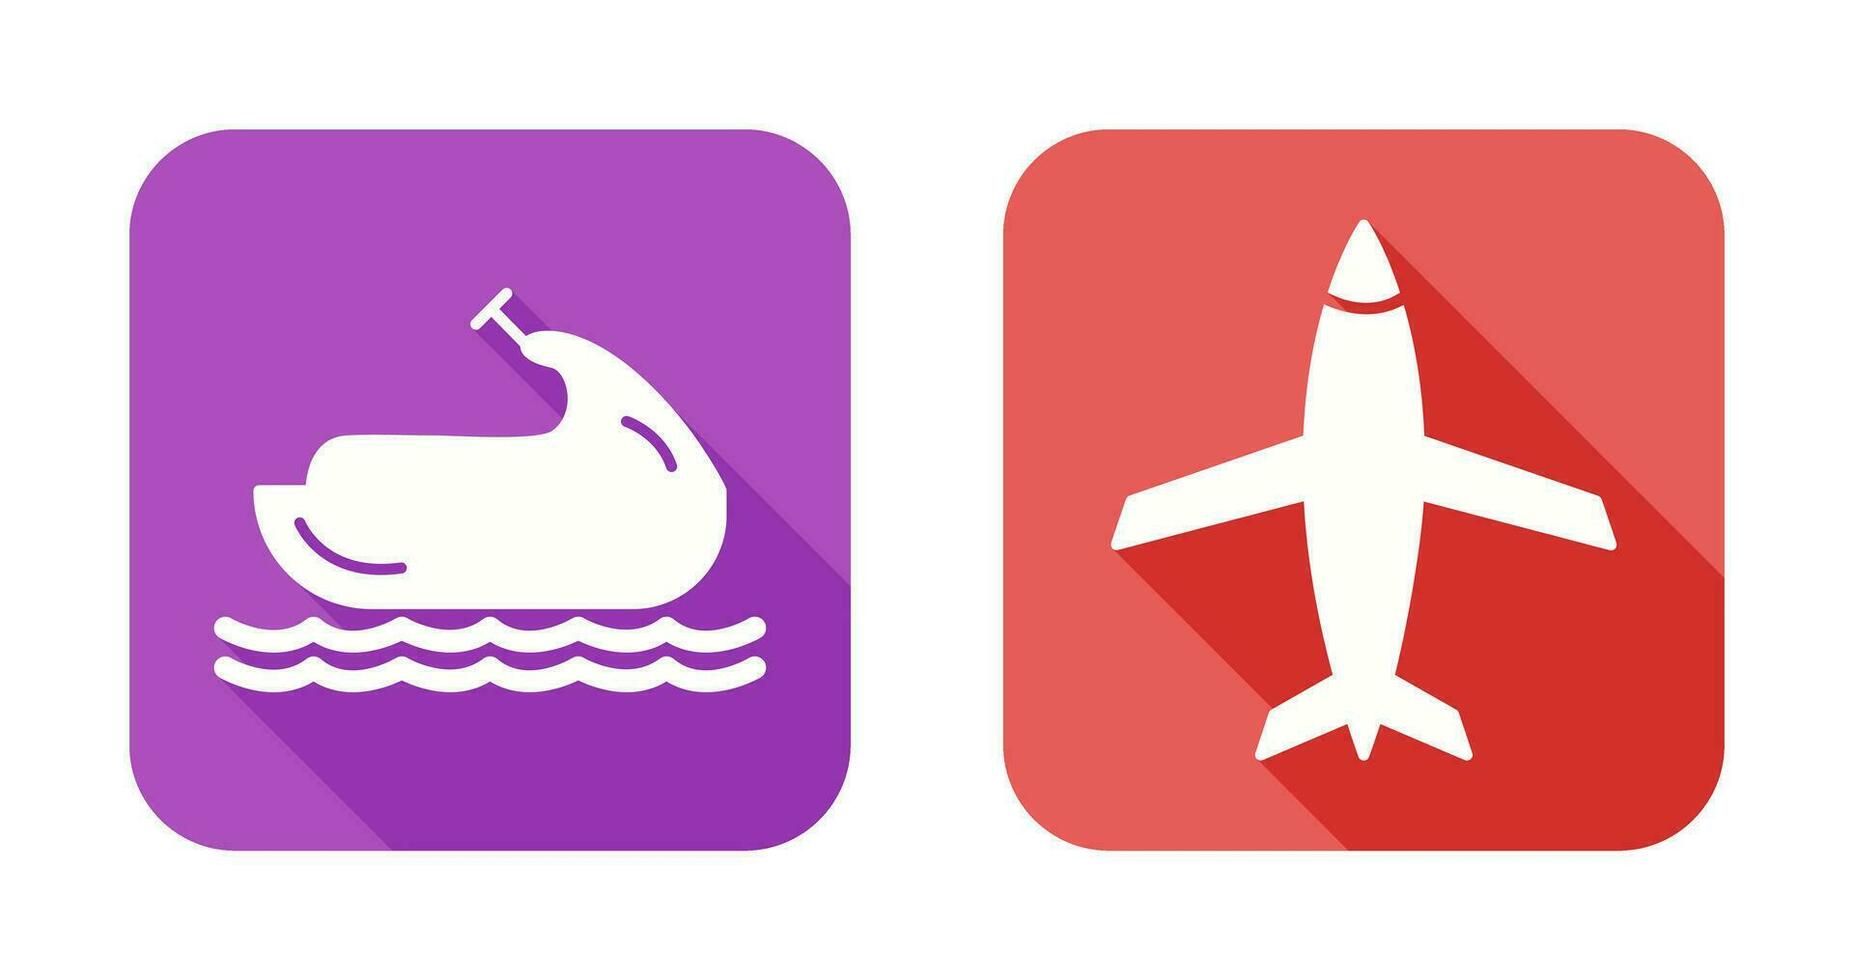 Jet Ski and Plane Icon vector